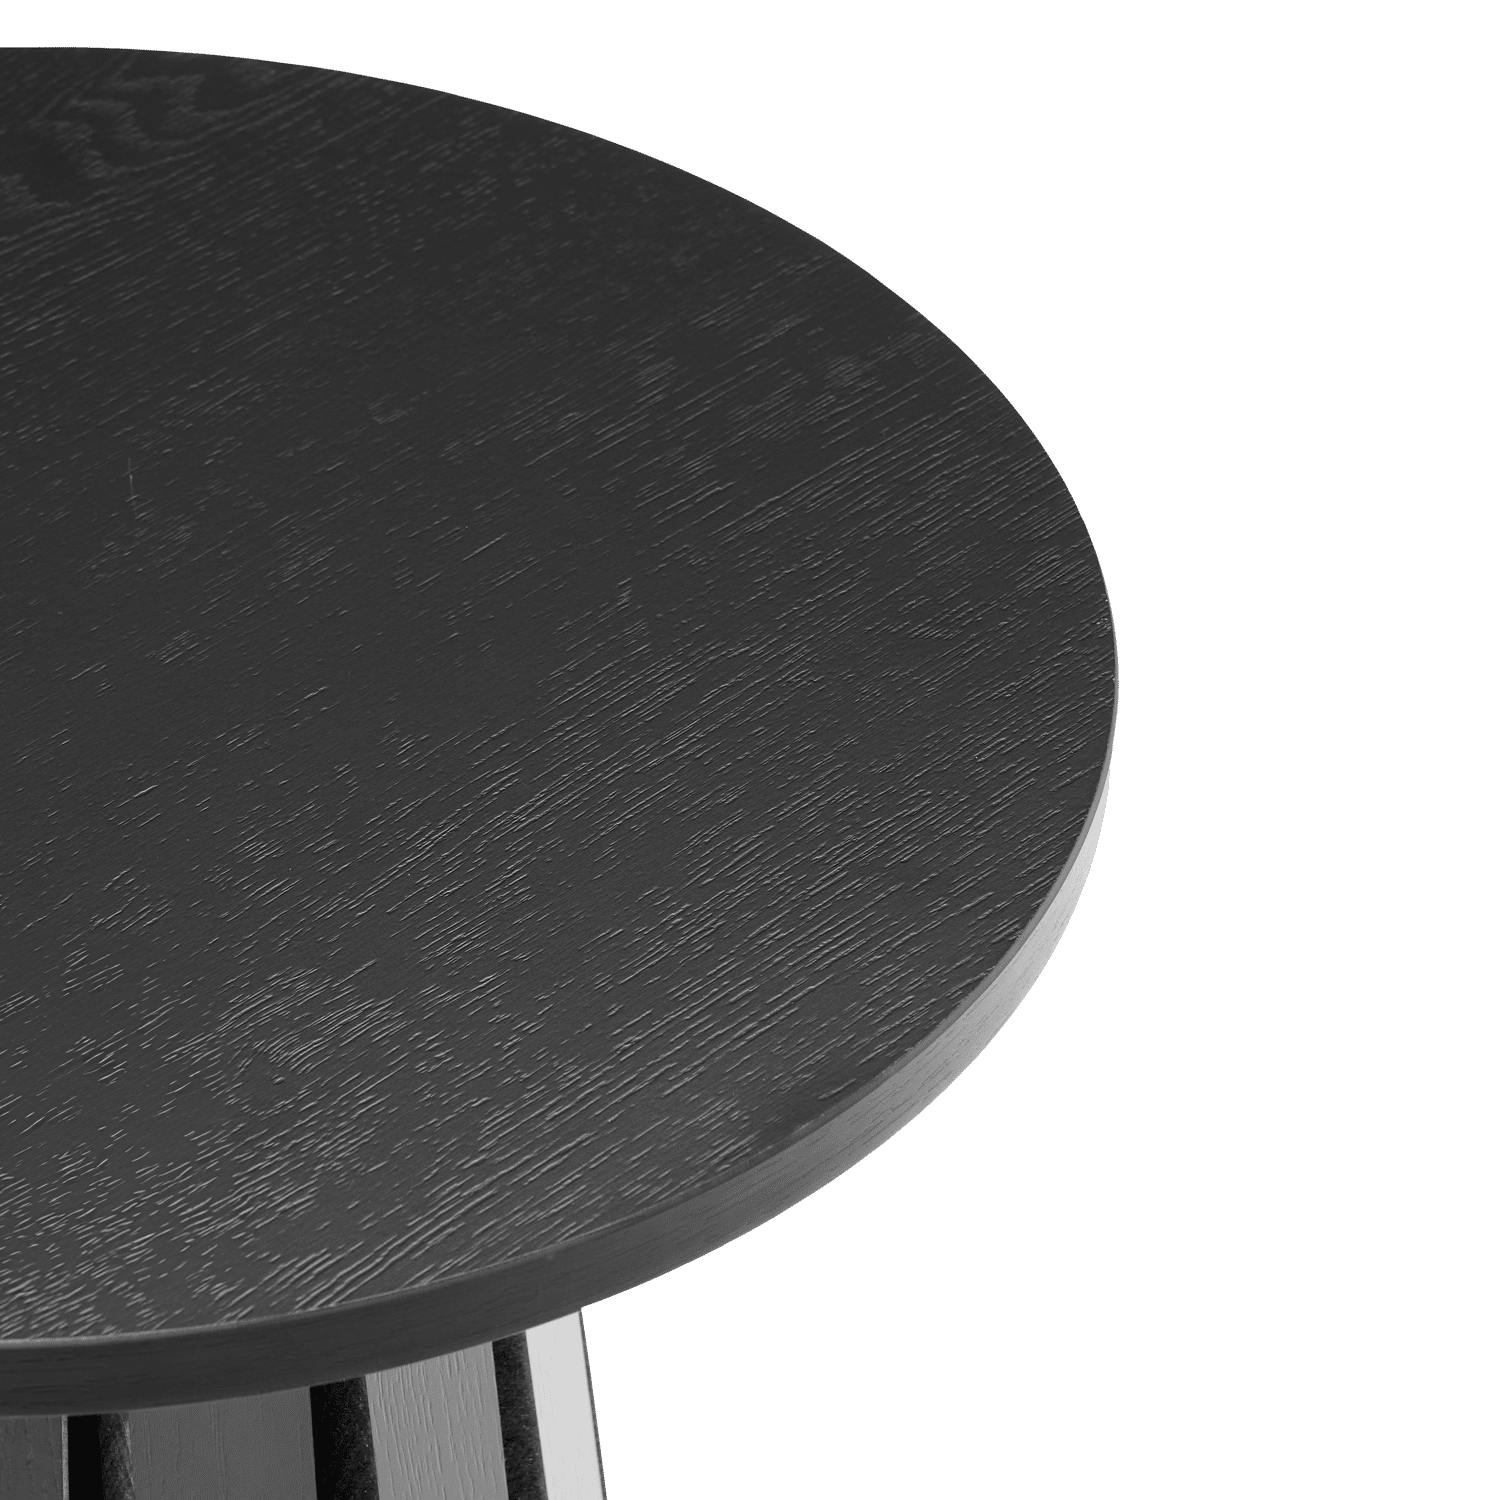 Table d'appoint ronde style scandinave noire LIV